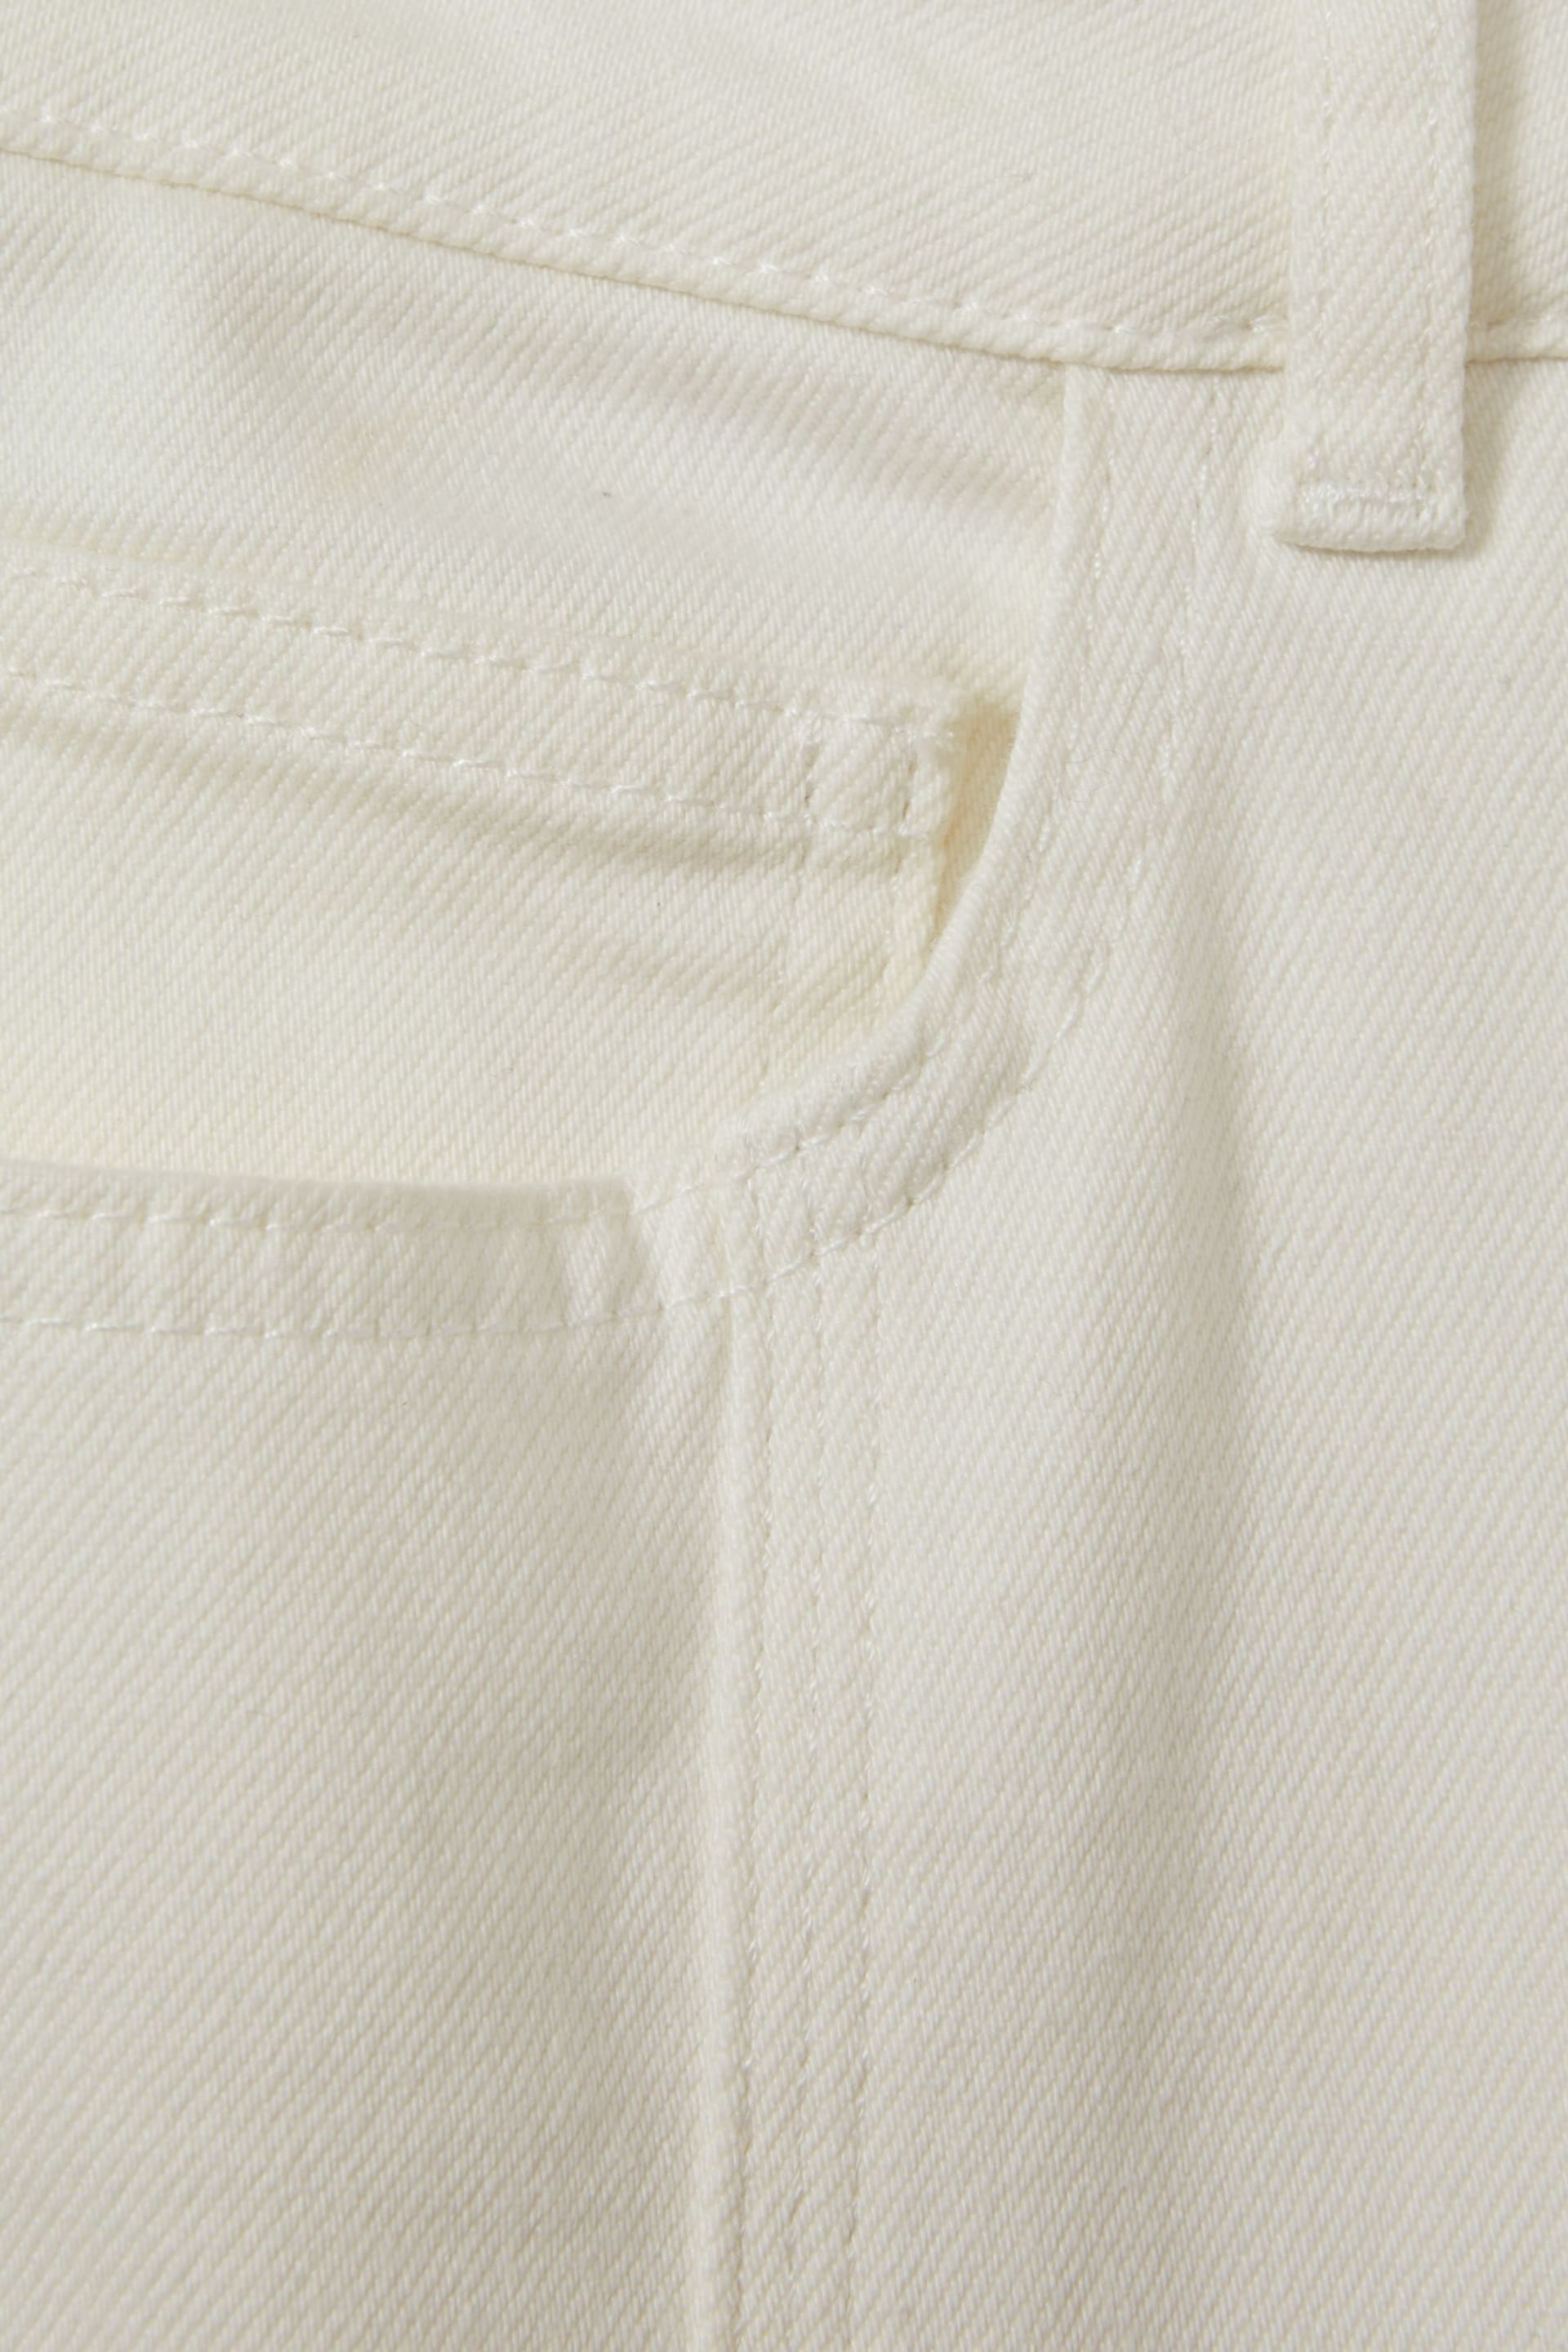 Reiss Ecru Juniper Petite Flared Front Seam Jeans - Image 5 of 6